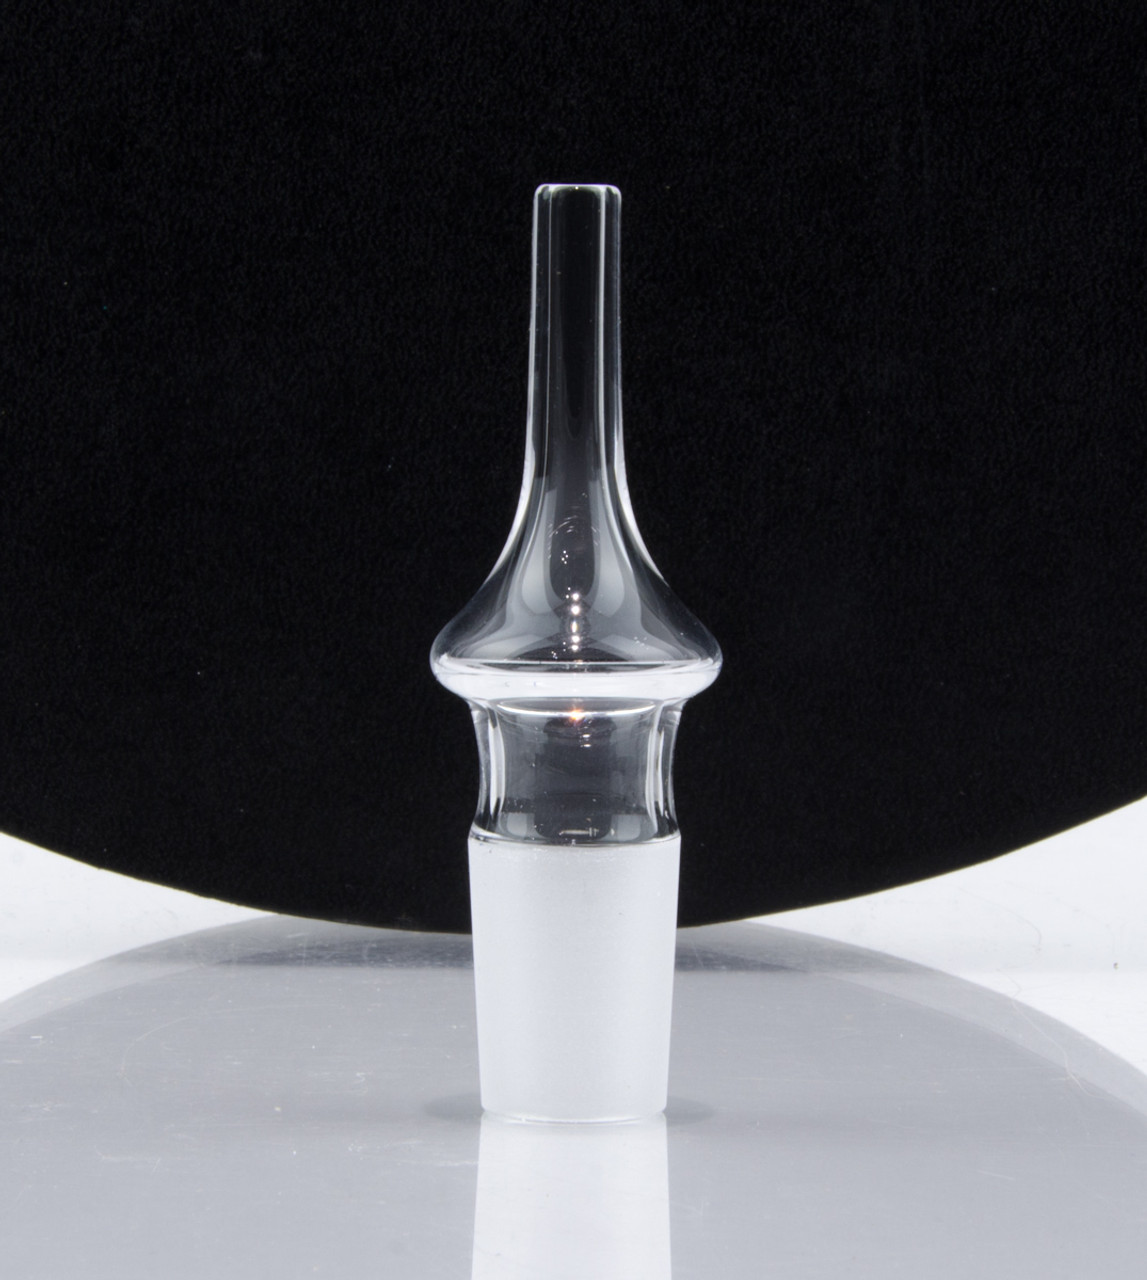 14mm Quartz Nectar Collector Replacement Tip